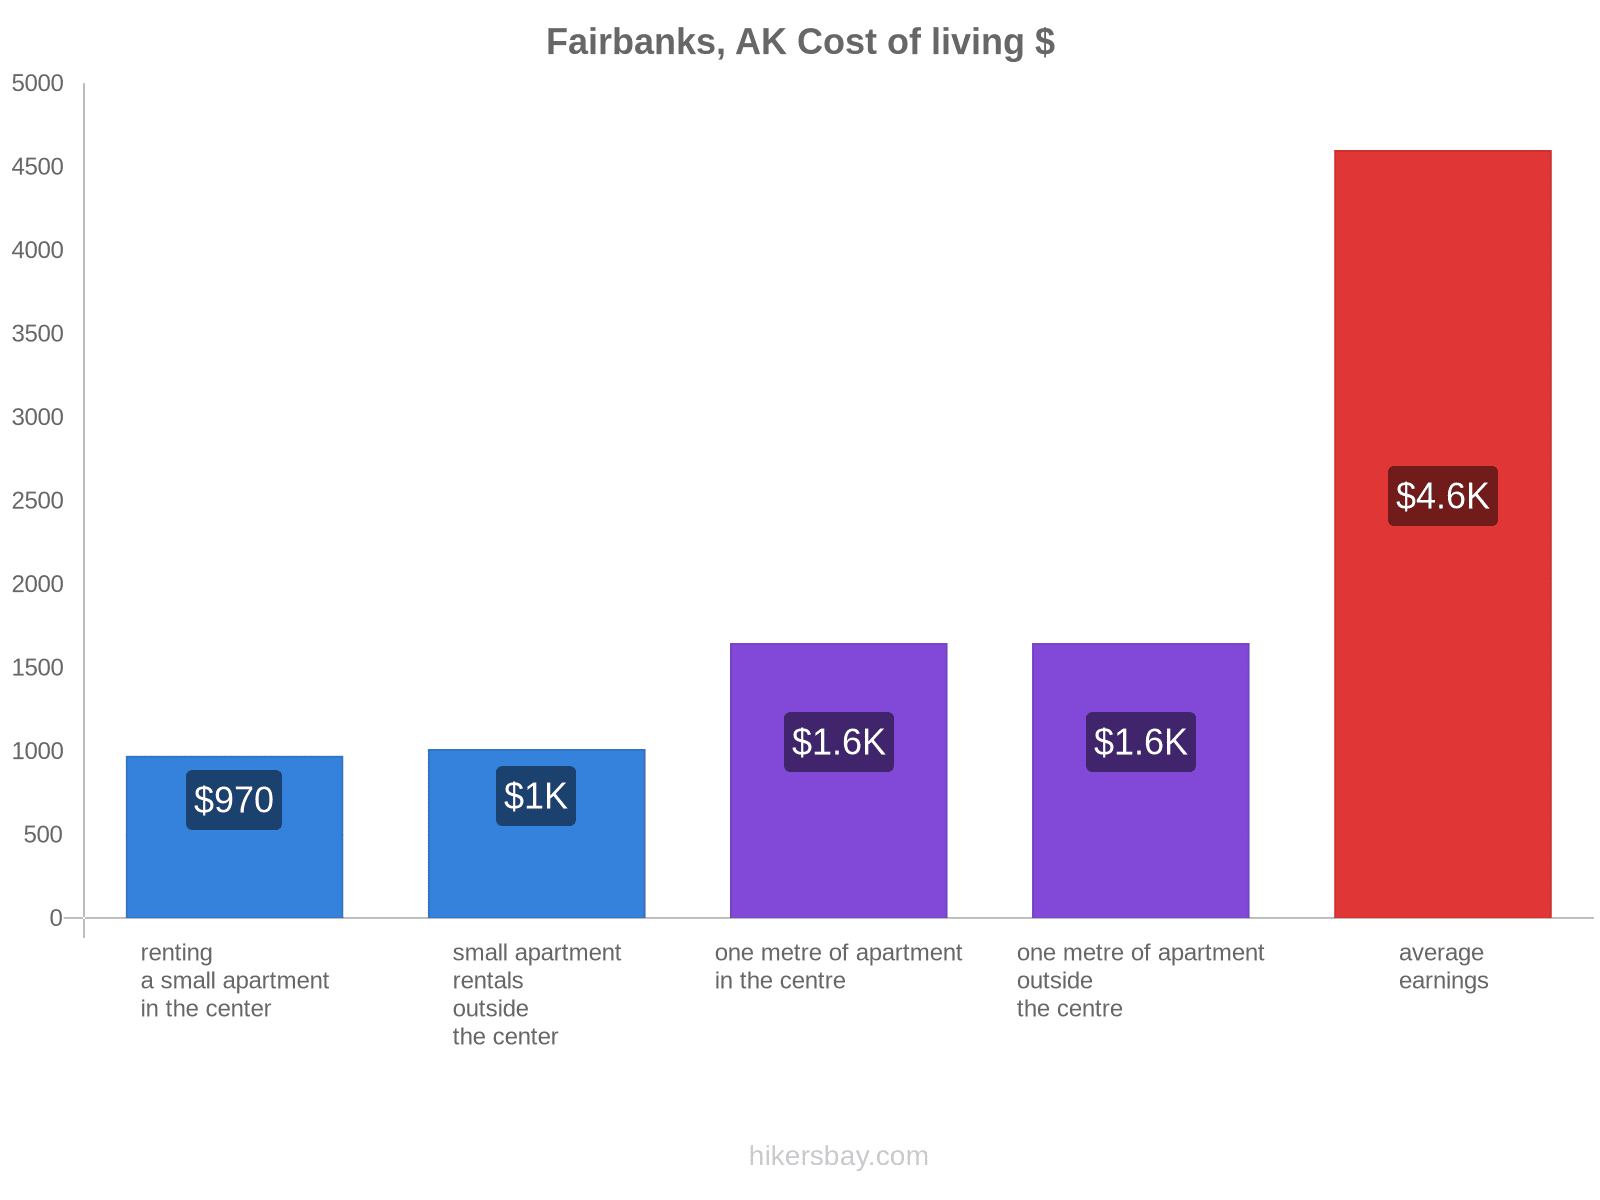 Fairbanks, AK cost of living hikersbay.com